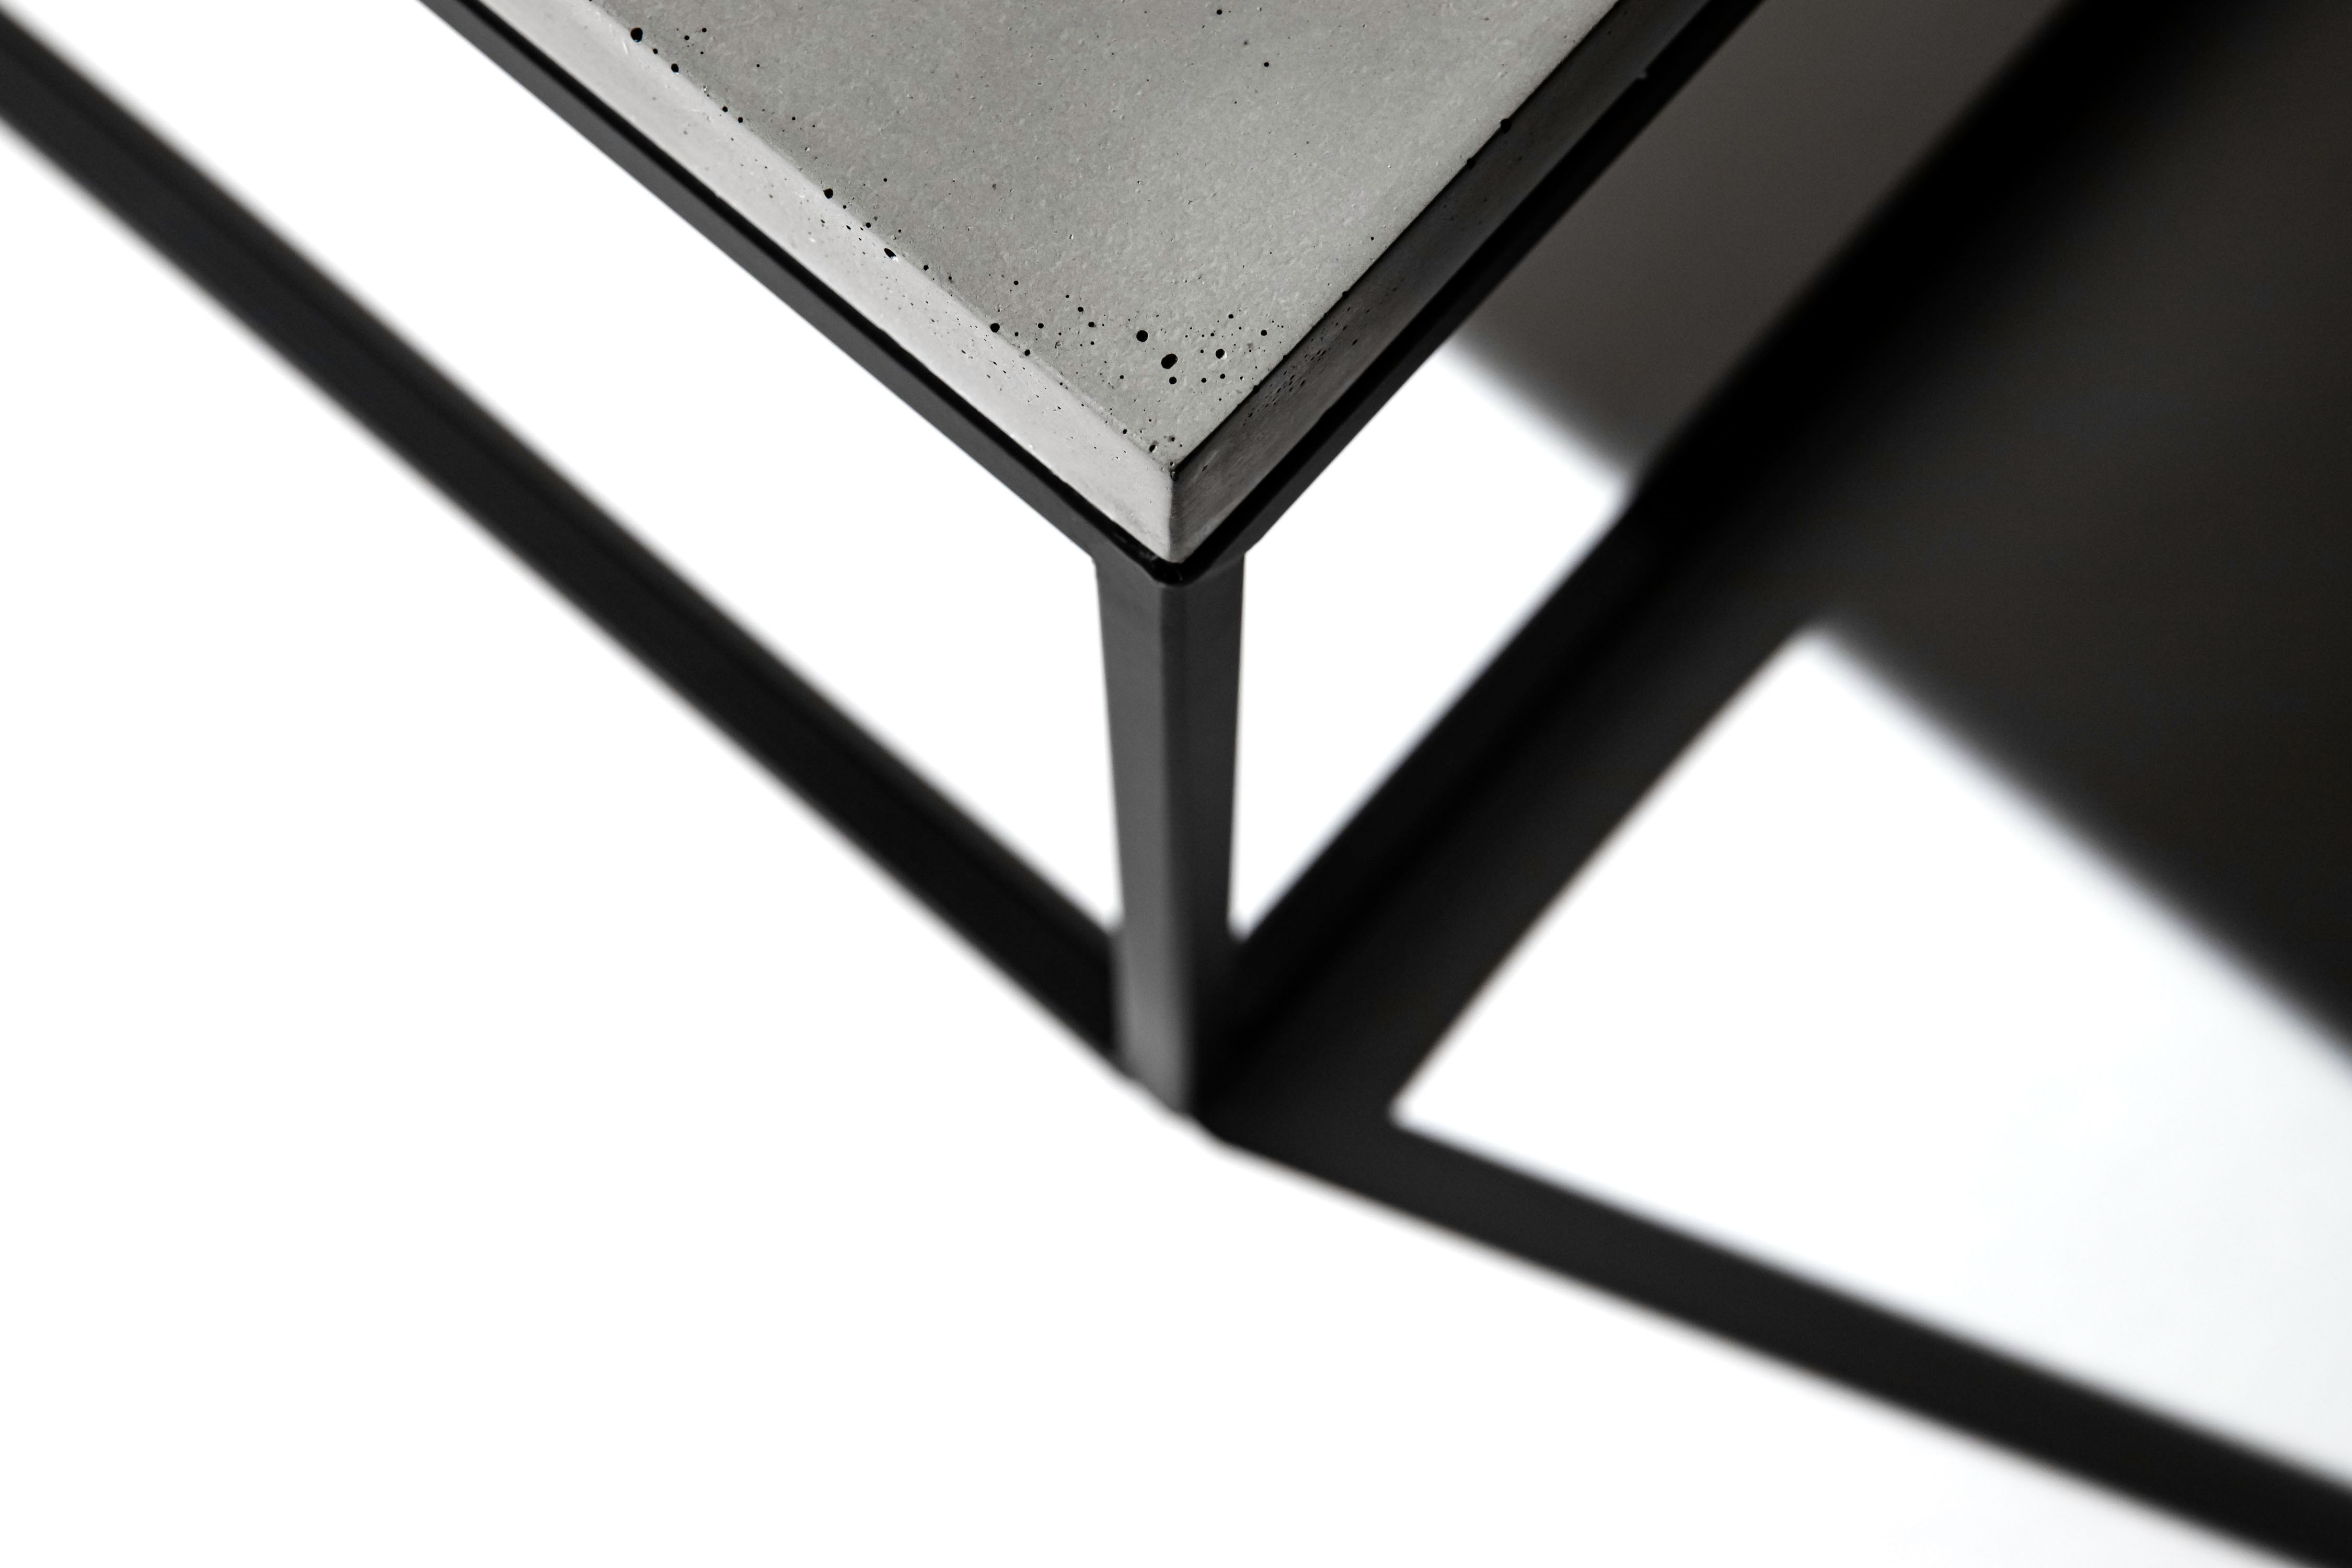 Möbel aus Beton: Perspective Coffee Table L, black edition